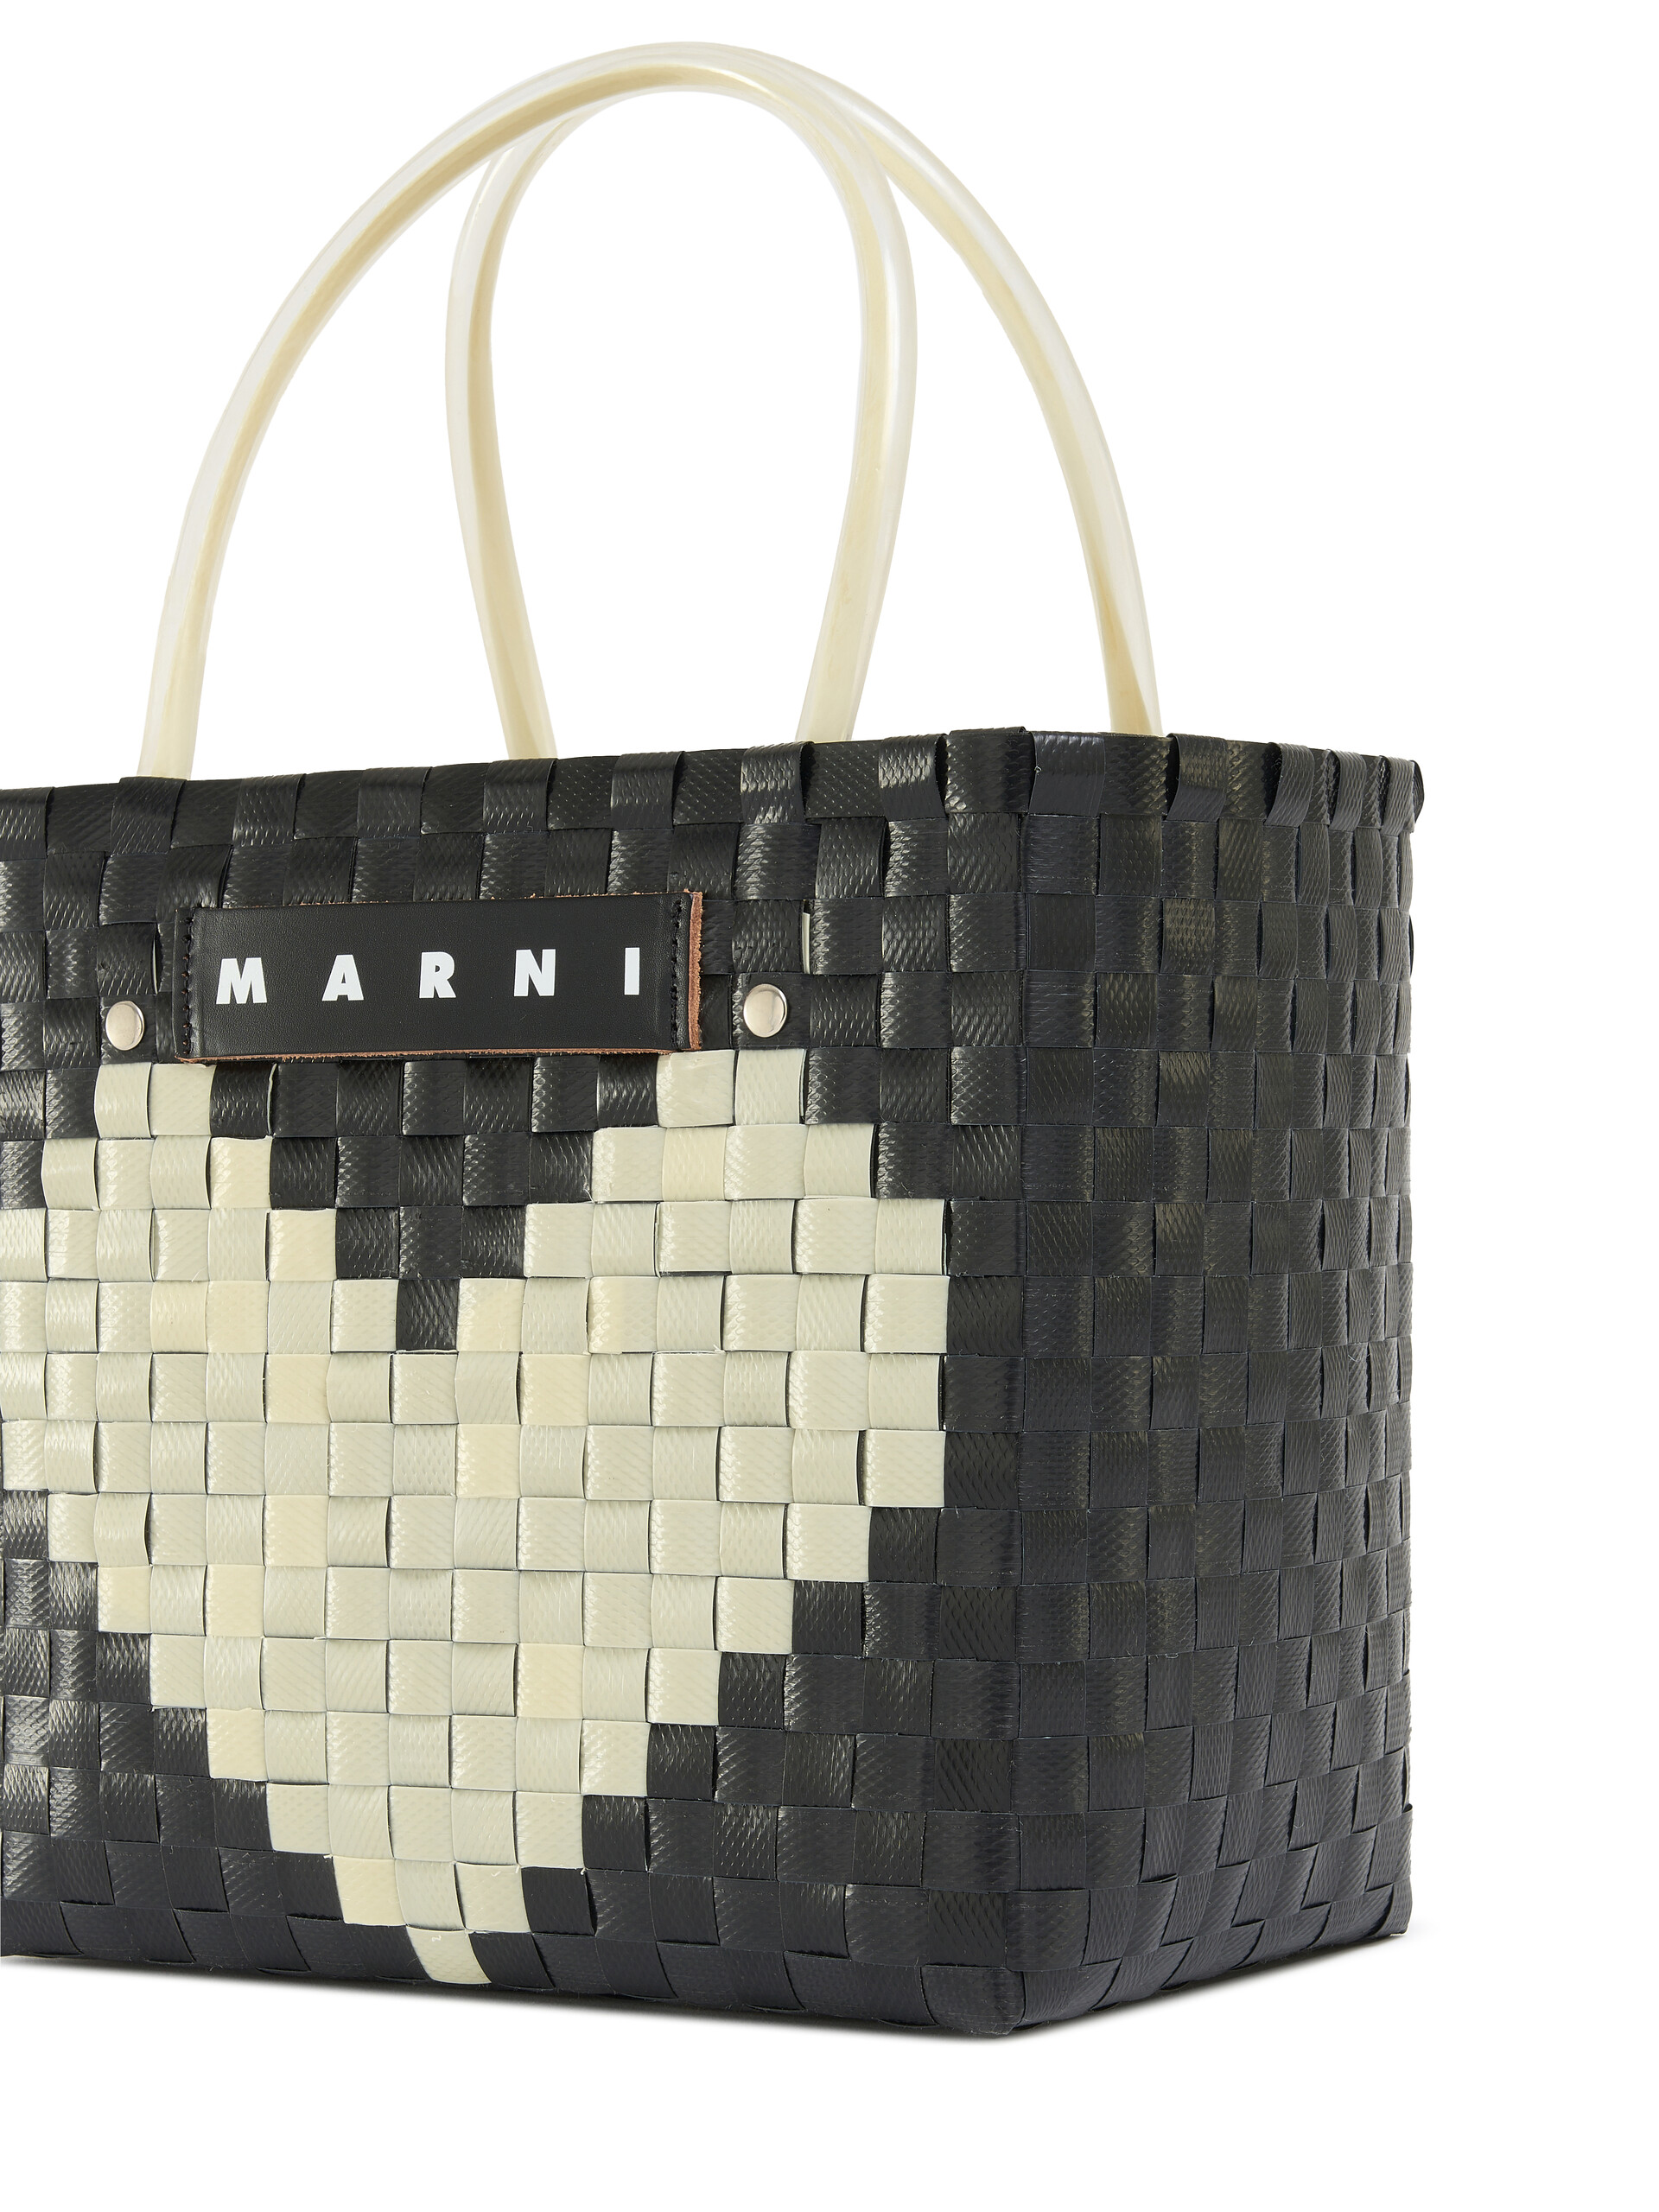 Marni Market Love Mini Basket Bag with black heart - Shopping Bags - Image 4